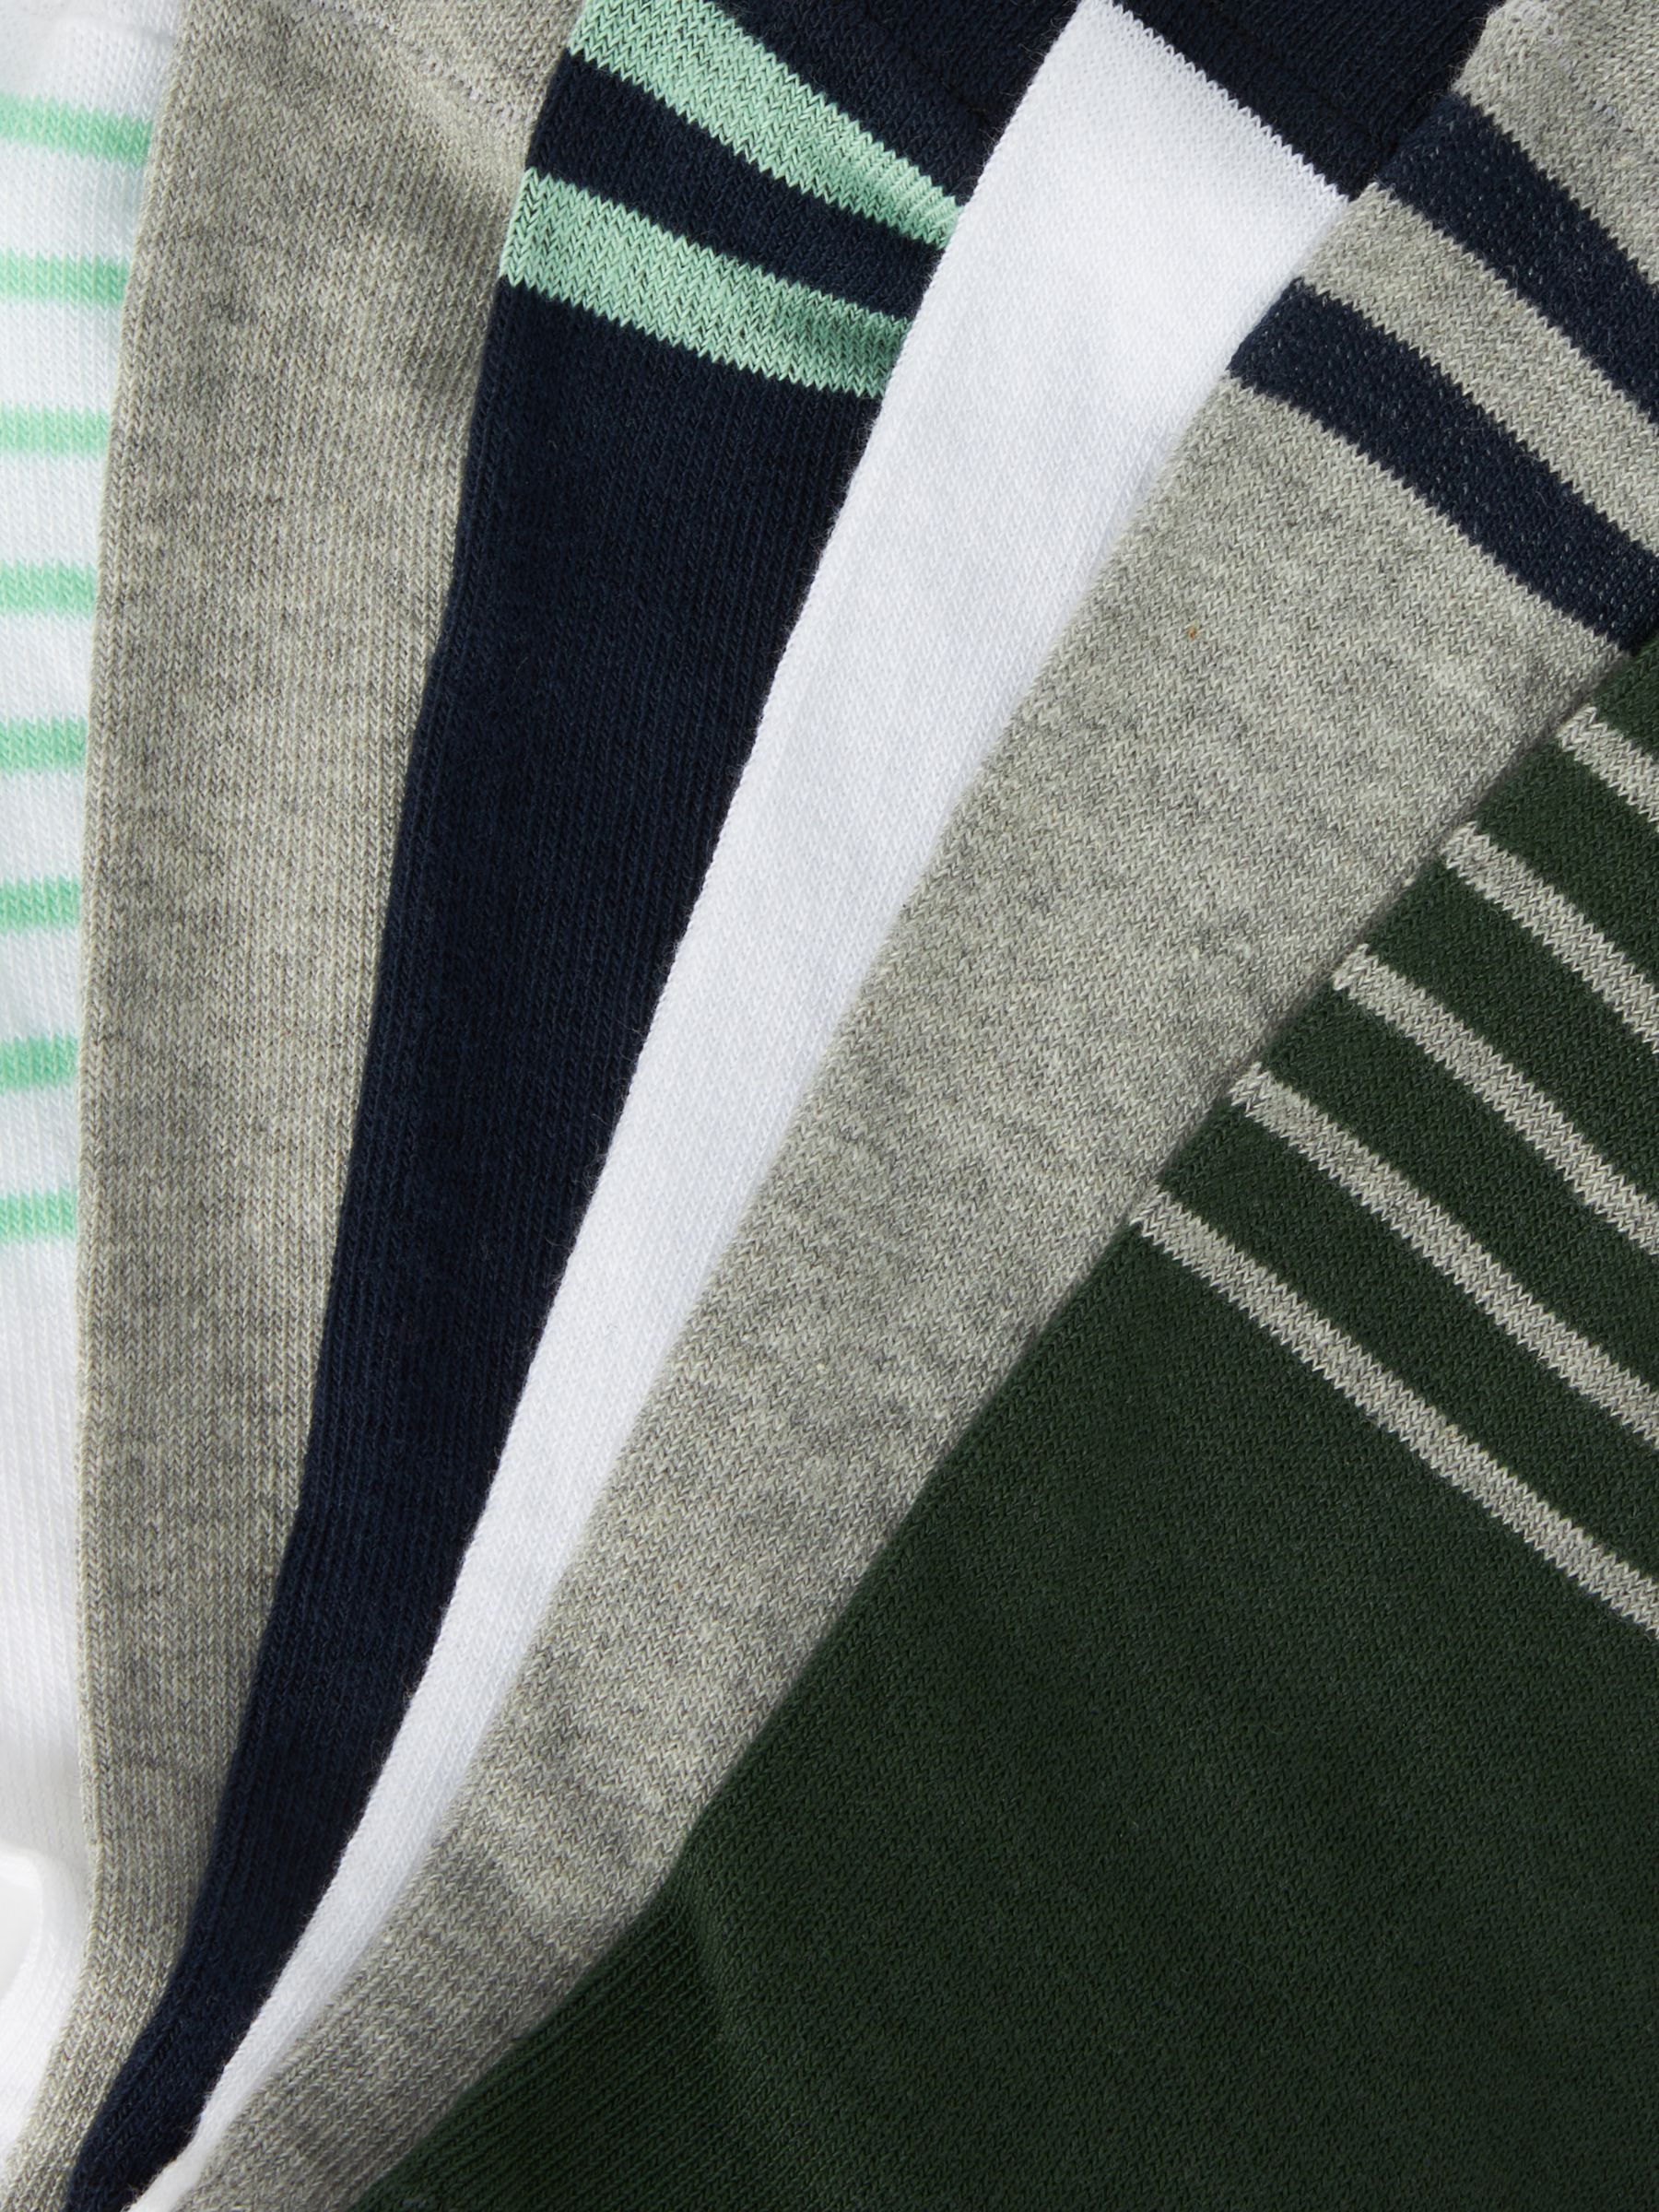 John Lewis ANYDAY Multi Stripe Ankle Socks, Pack of 7, Green/Multi, S